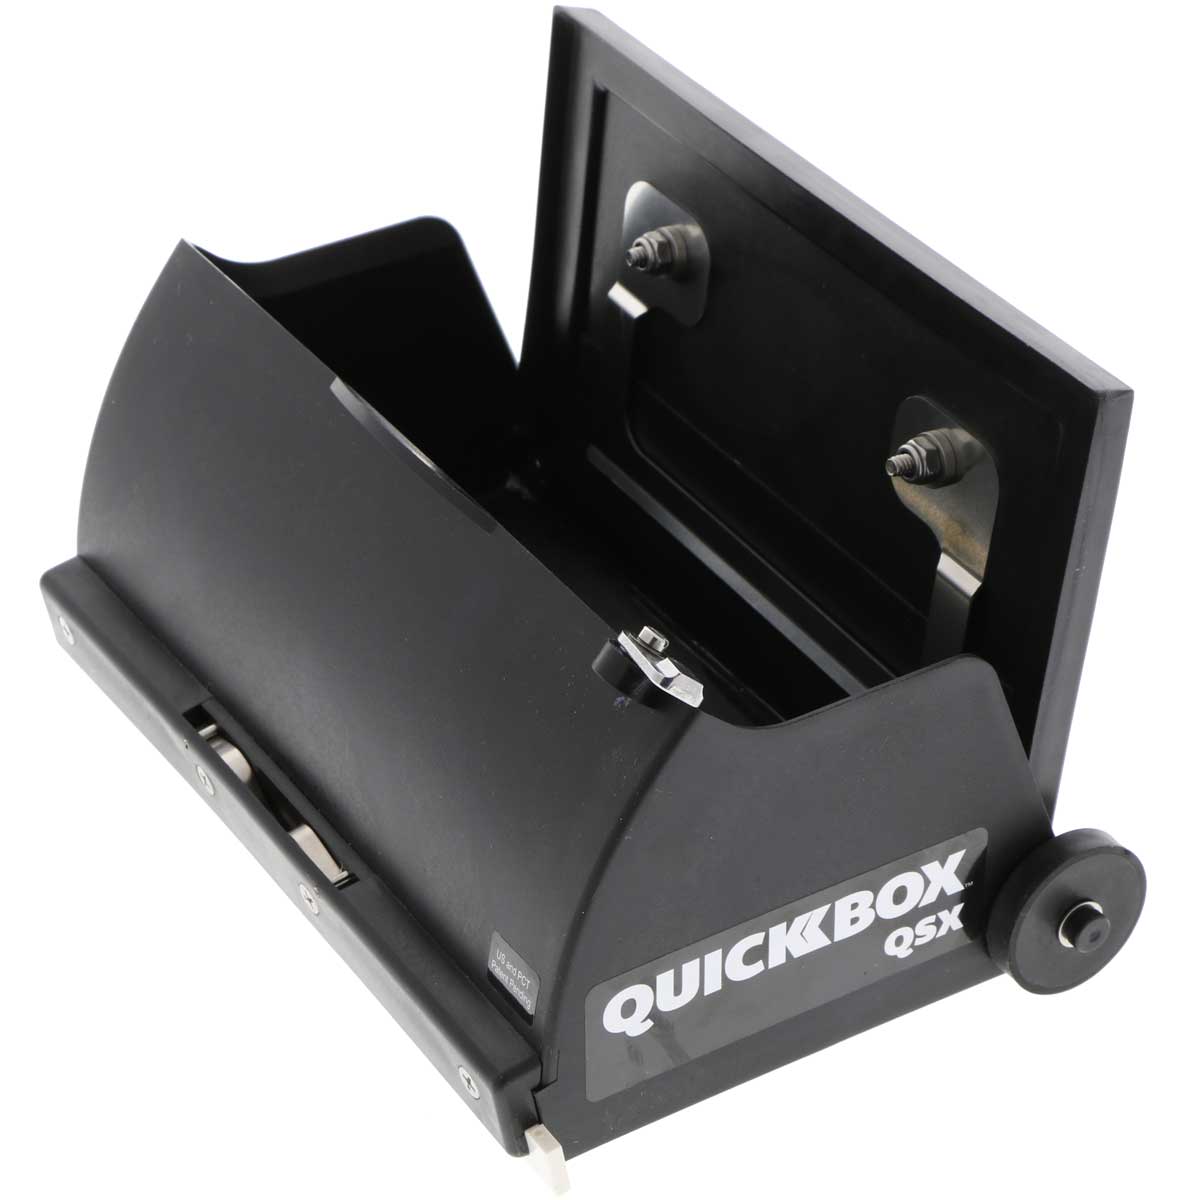 TapeTech QuickBox QSX 8